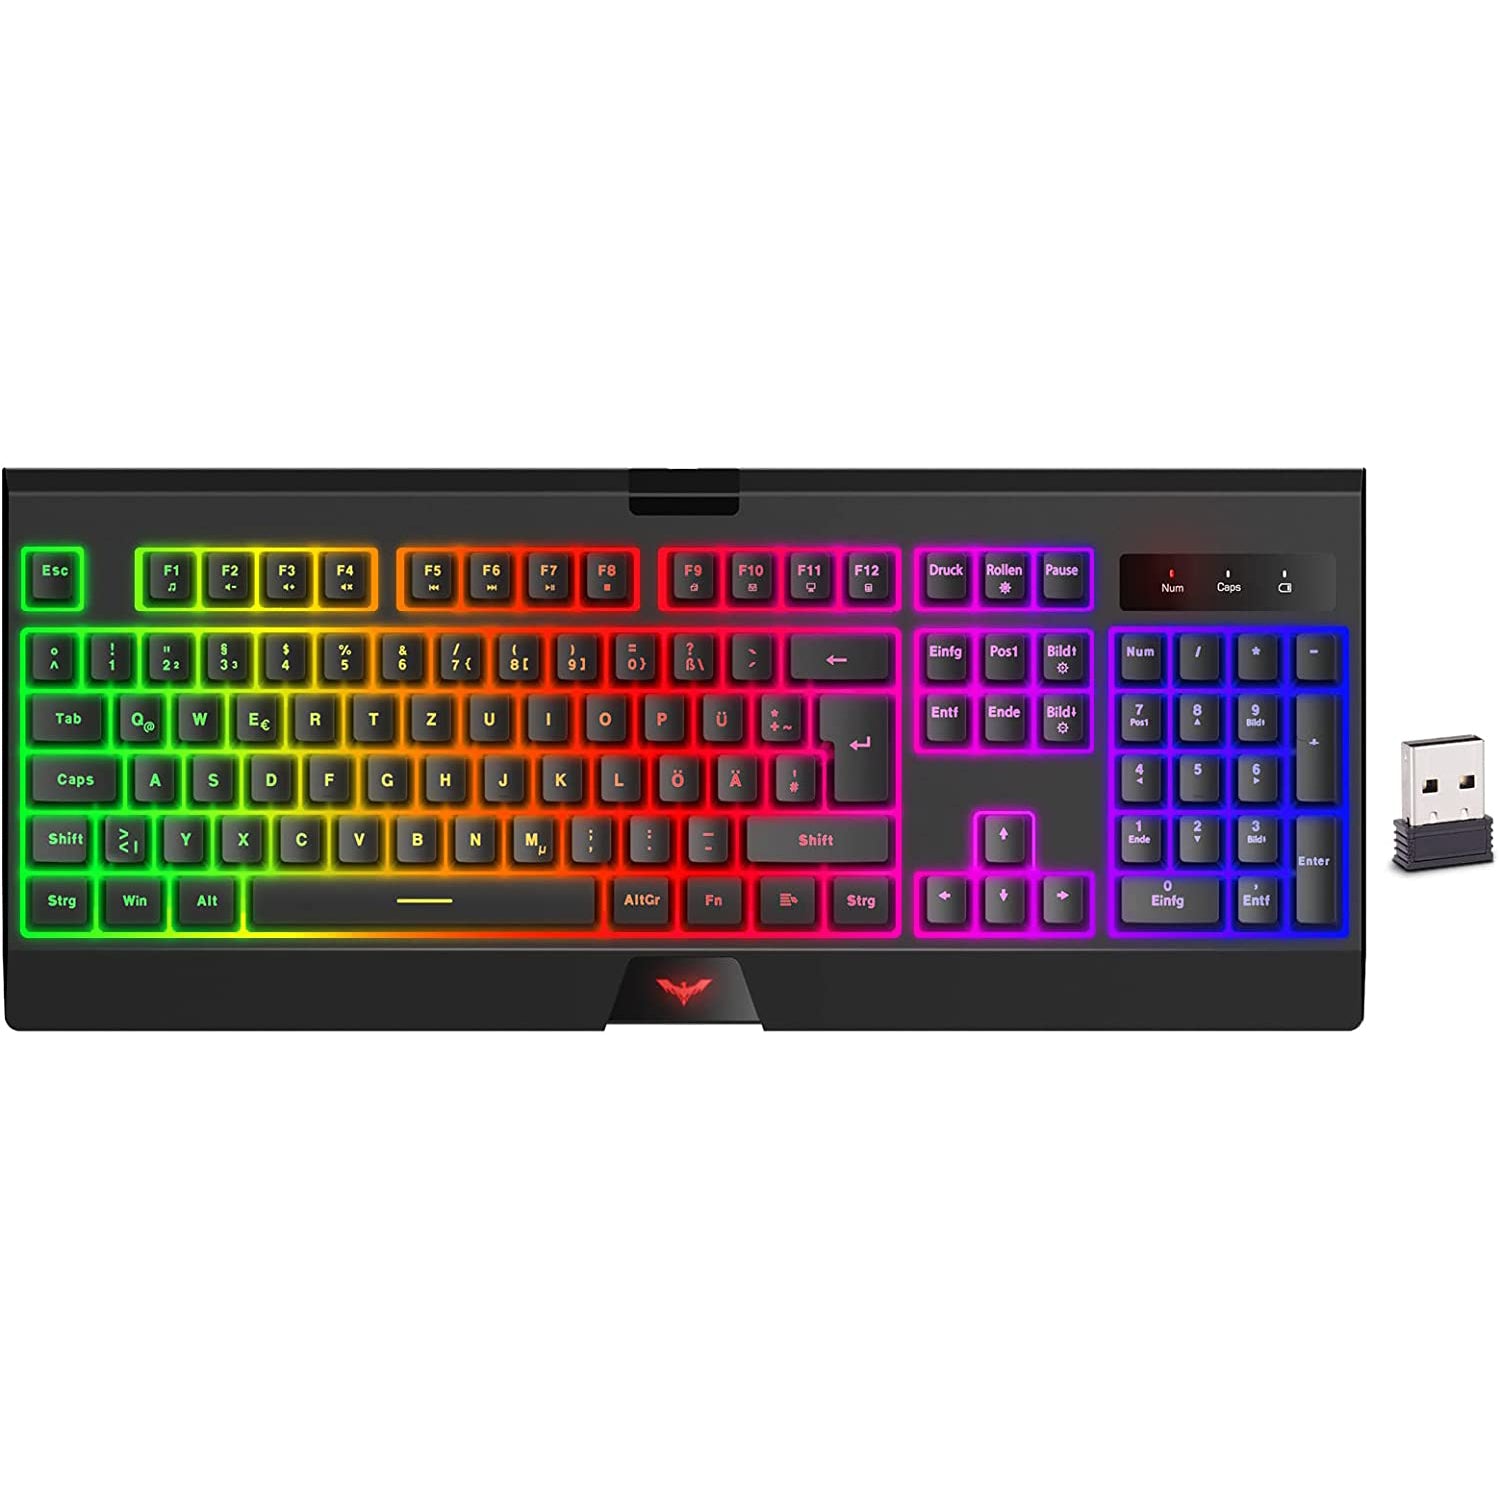 HAVIT KB663GCM Wireless Gaming Keyboard, 104 Keys Rechargeable, LED Rainbow Backlit